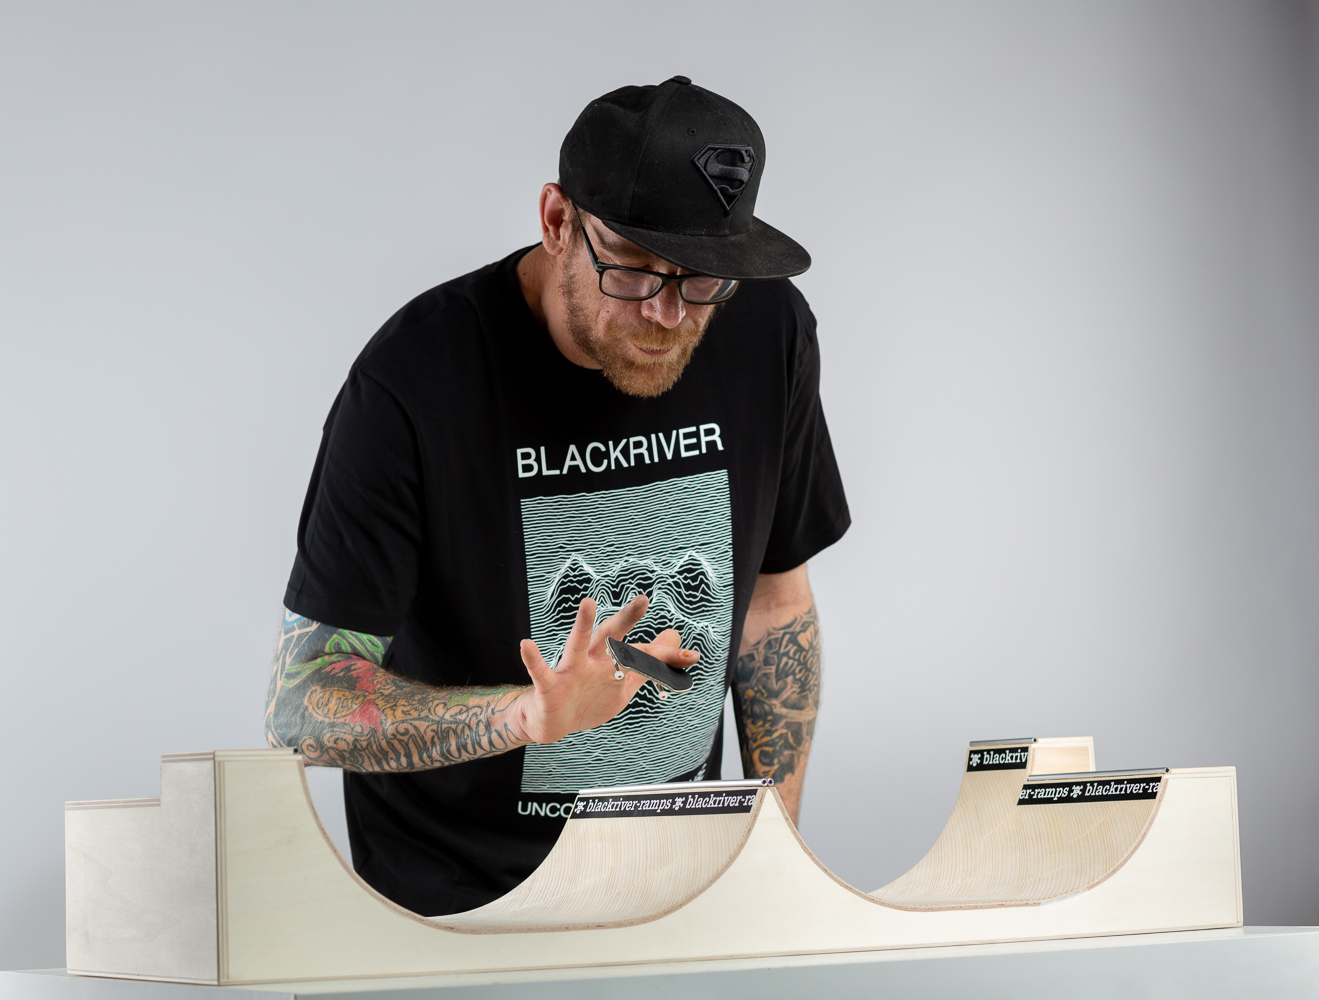 Blackriver Fingerboard Ramps - Mini Dos Spine